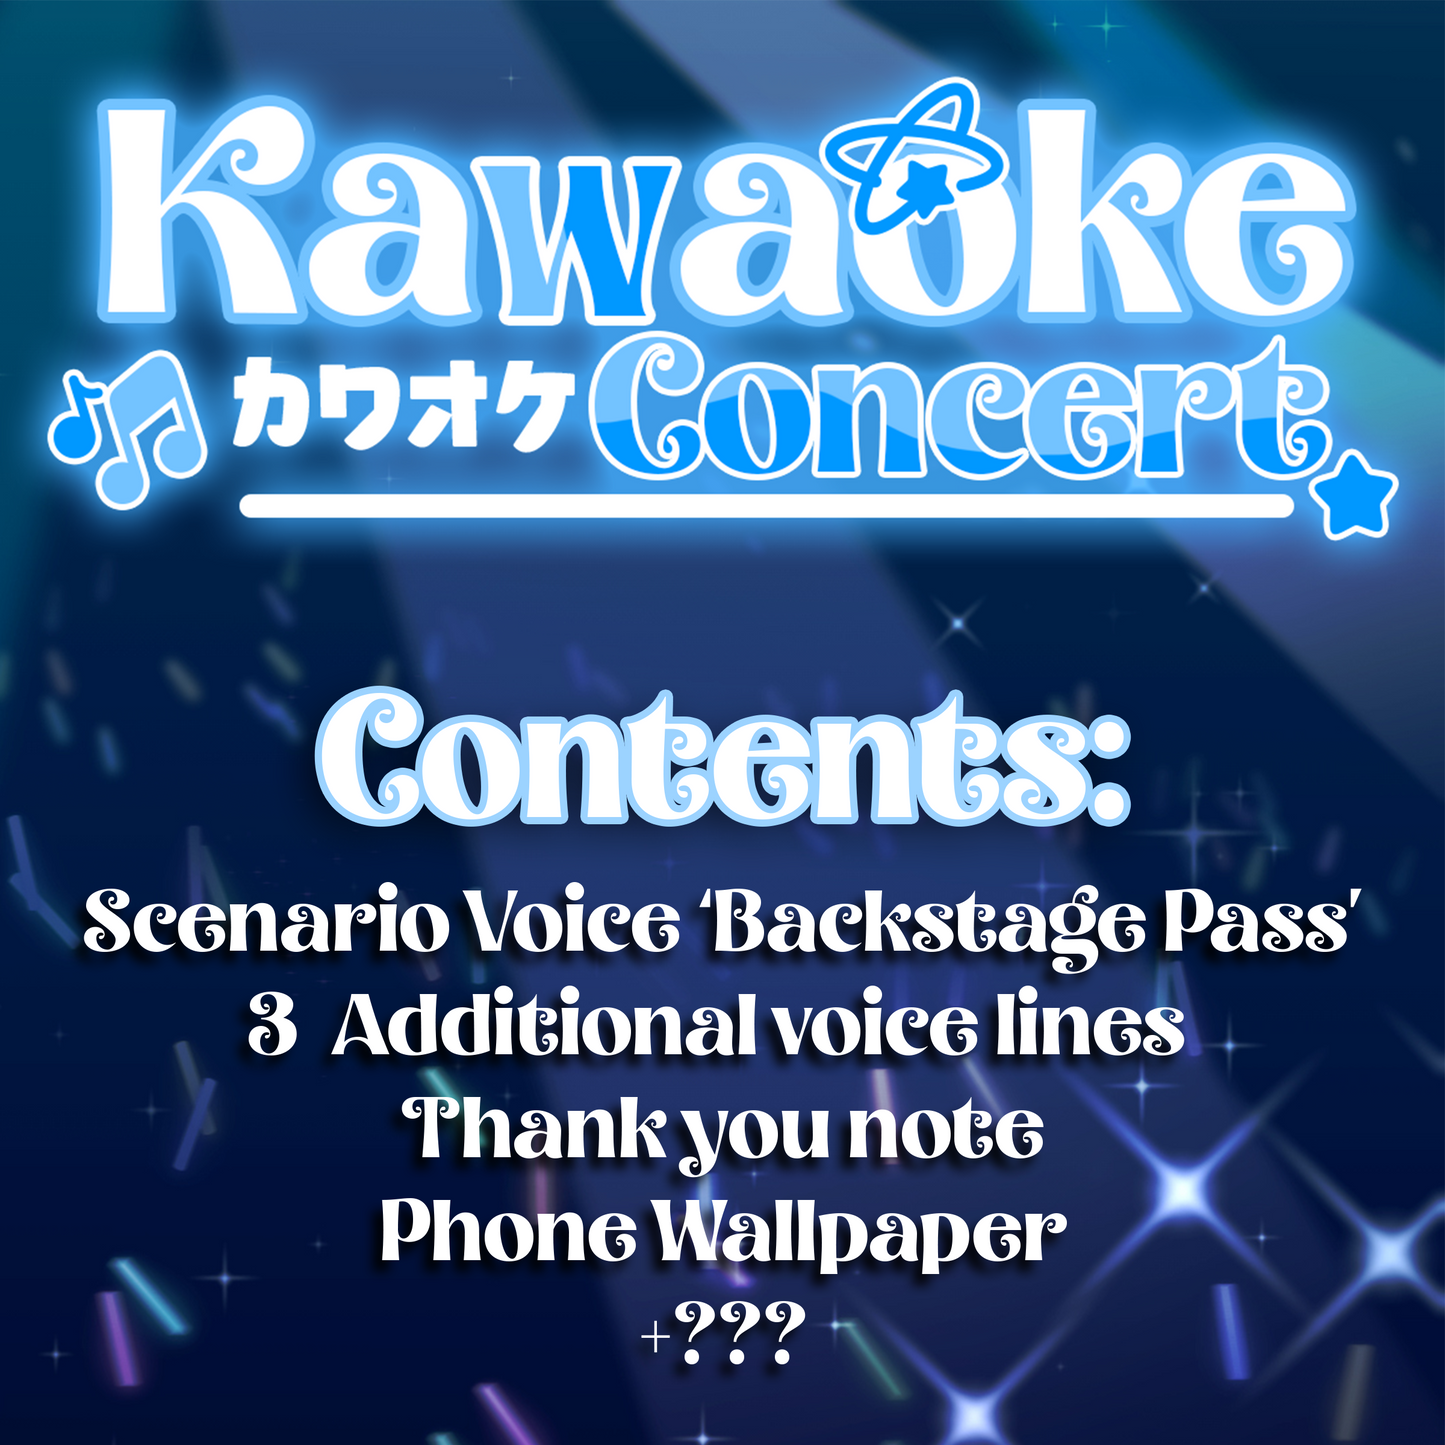 Mieko Mino : Kawaoke Concert Voice Pack